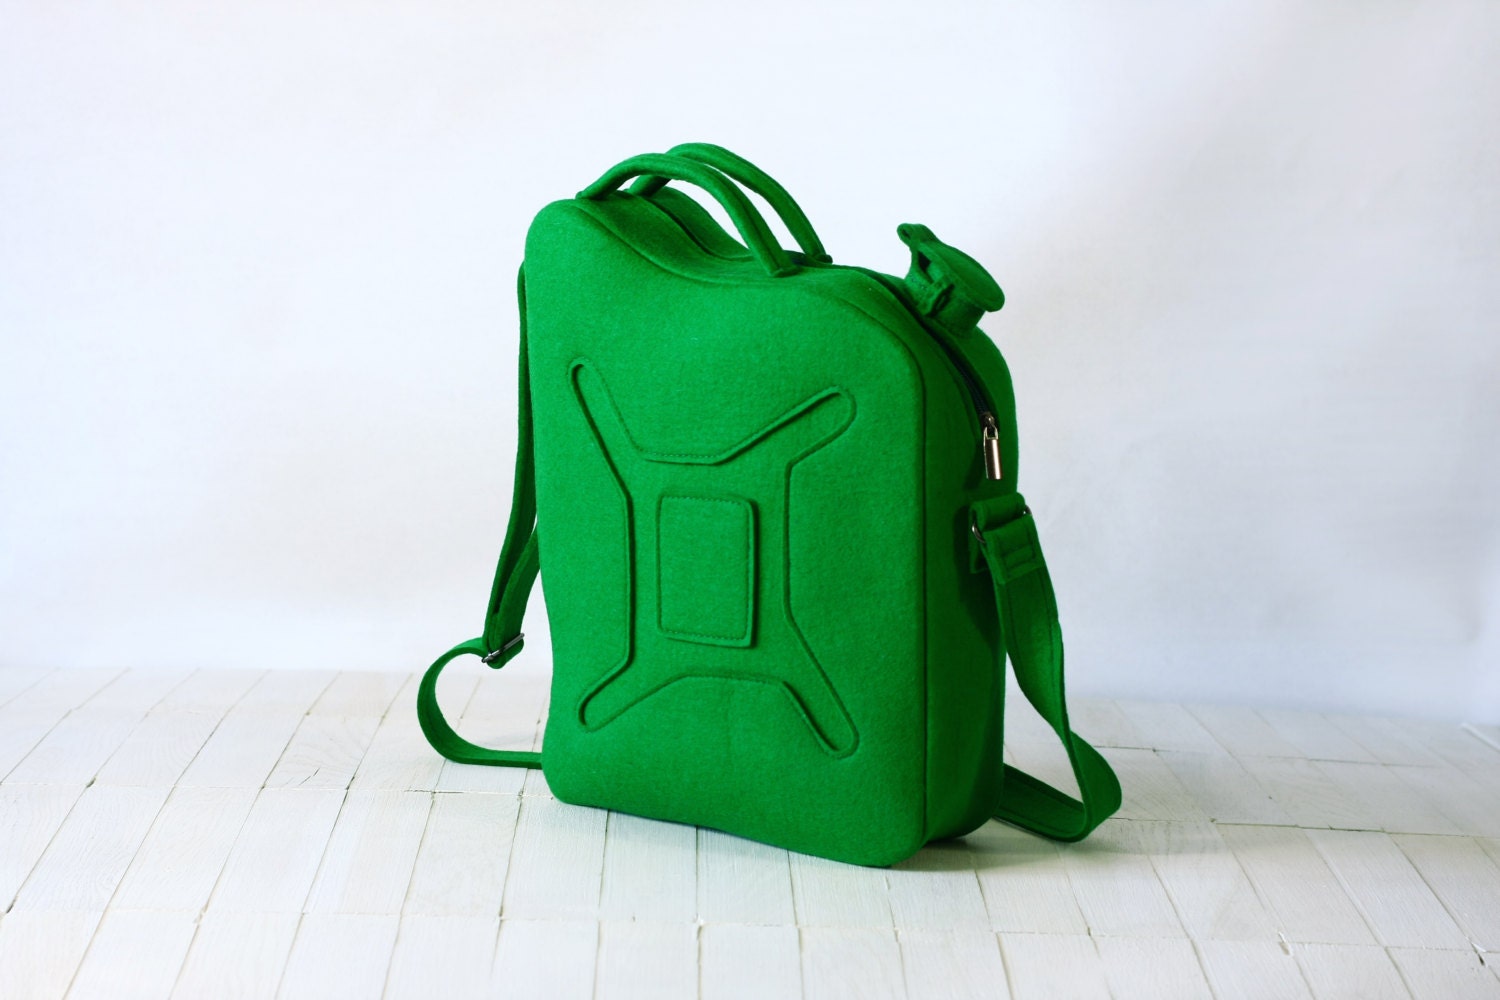 Green Felt Gas Can Bag